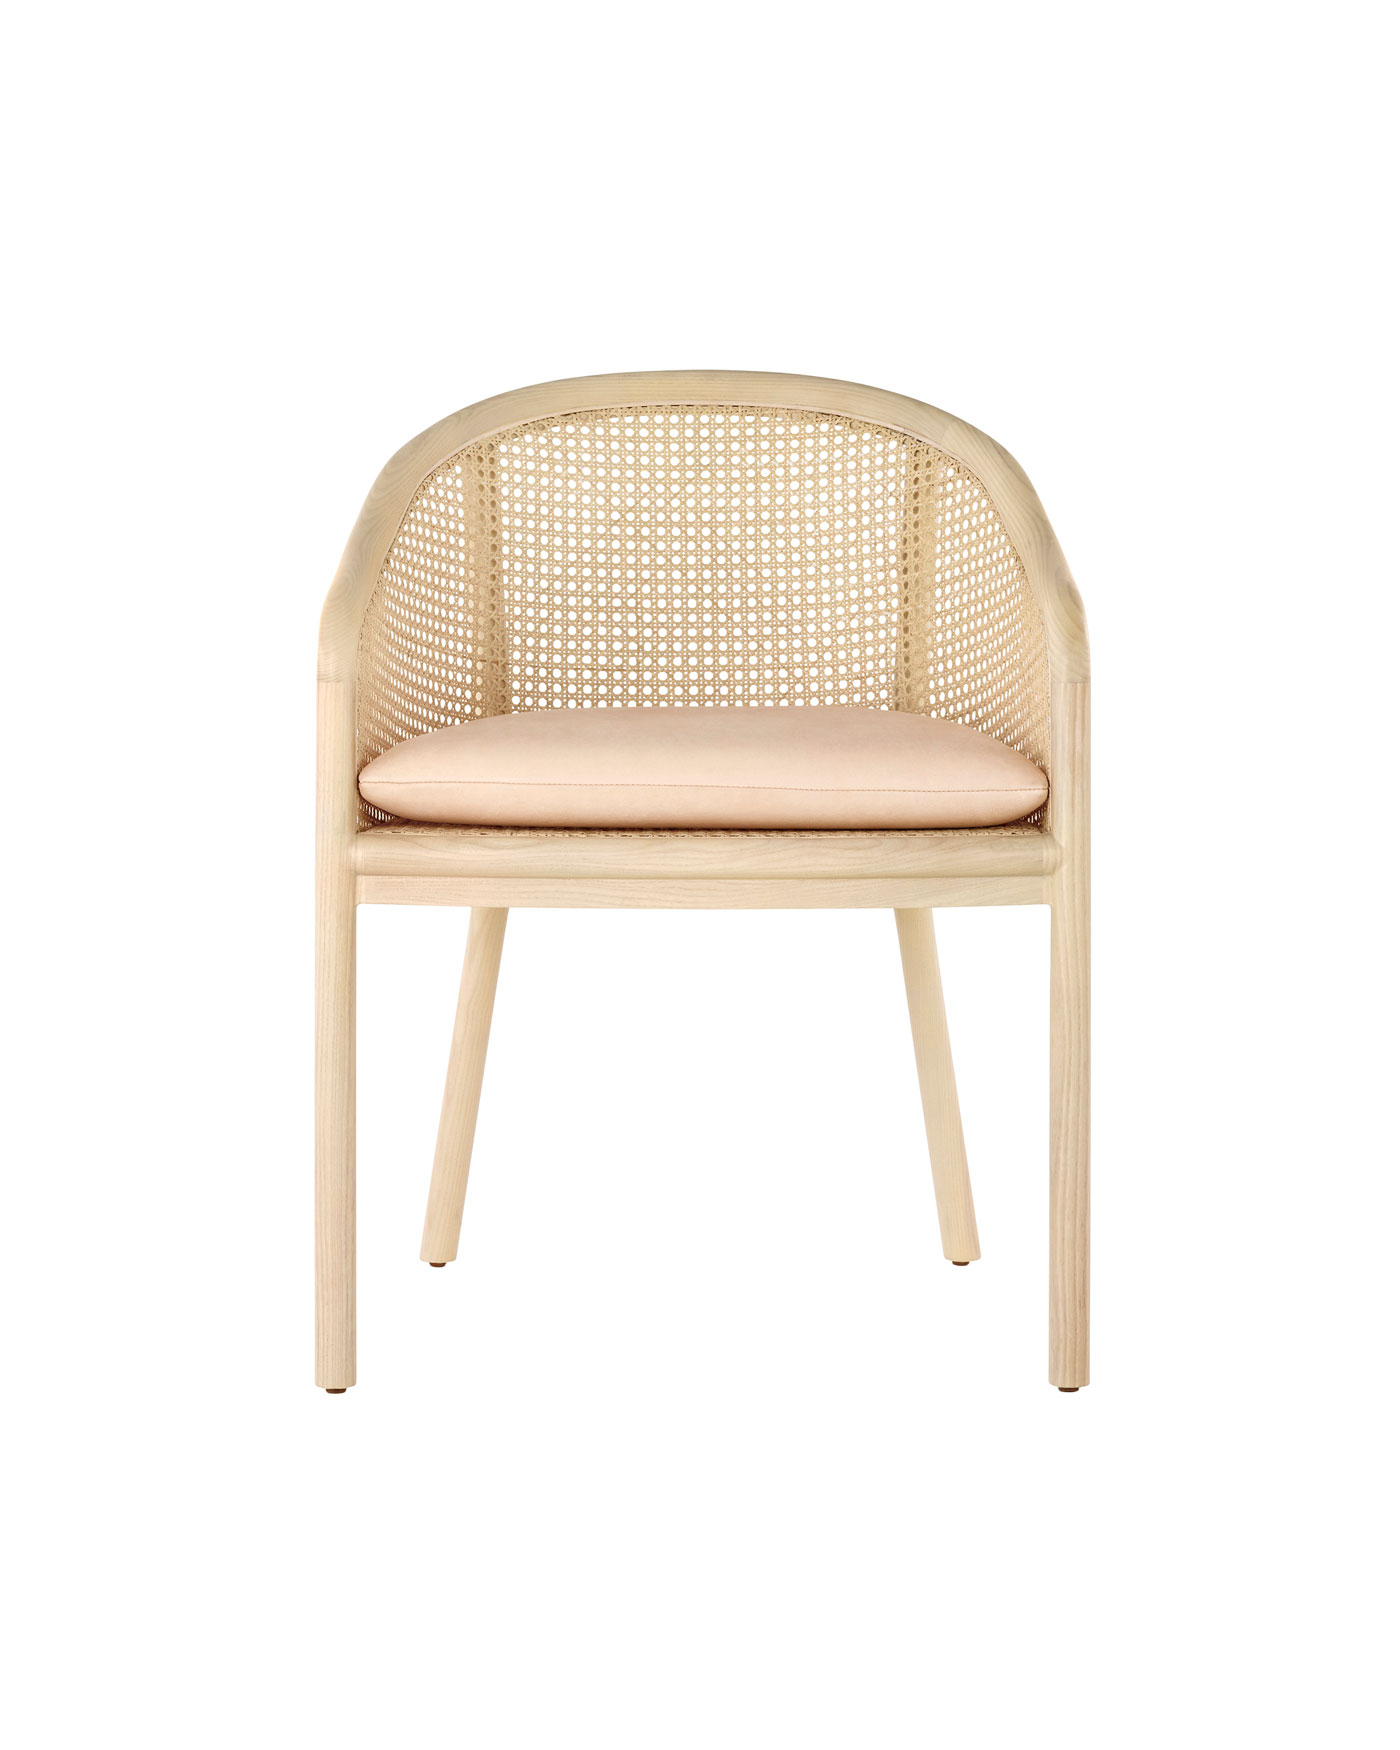  Landmark Chair 1964 by Ward Bennett featured in Chair 500 Designs That Matter